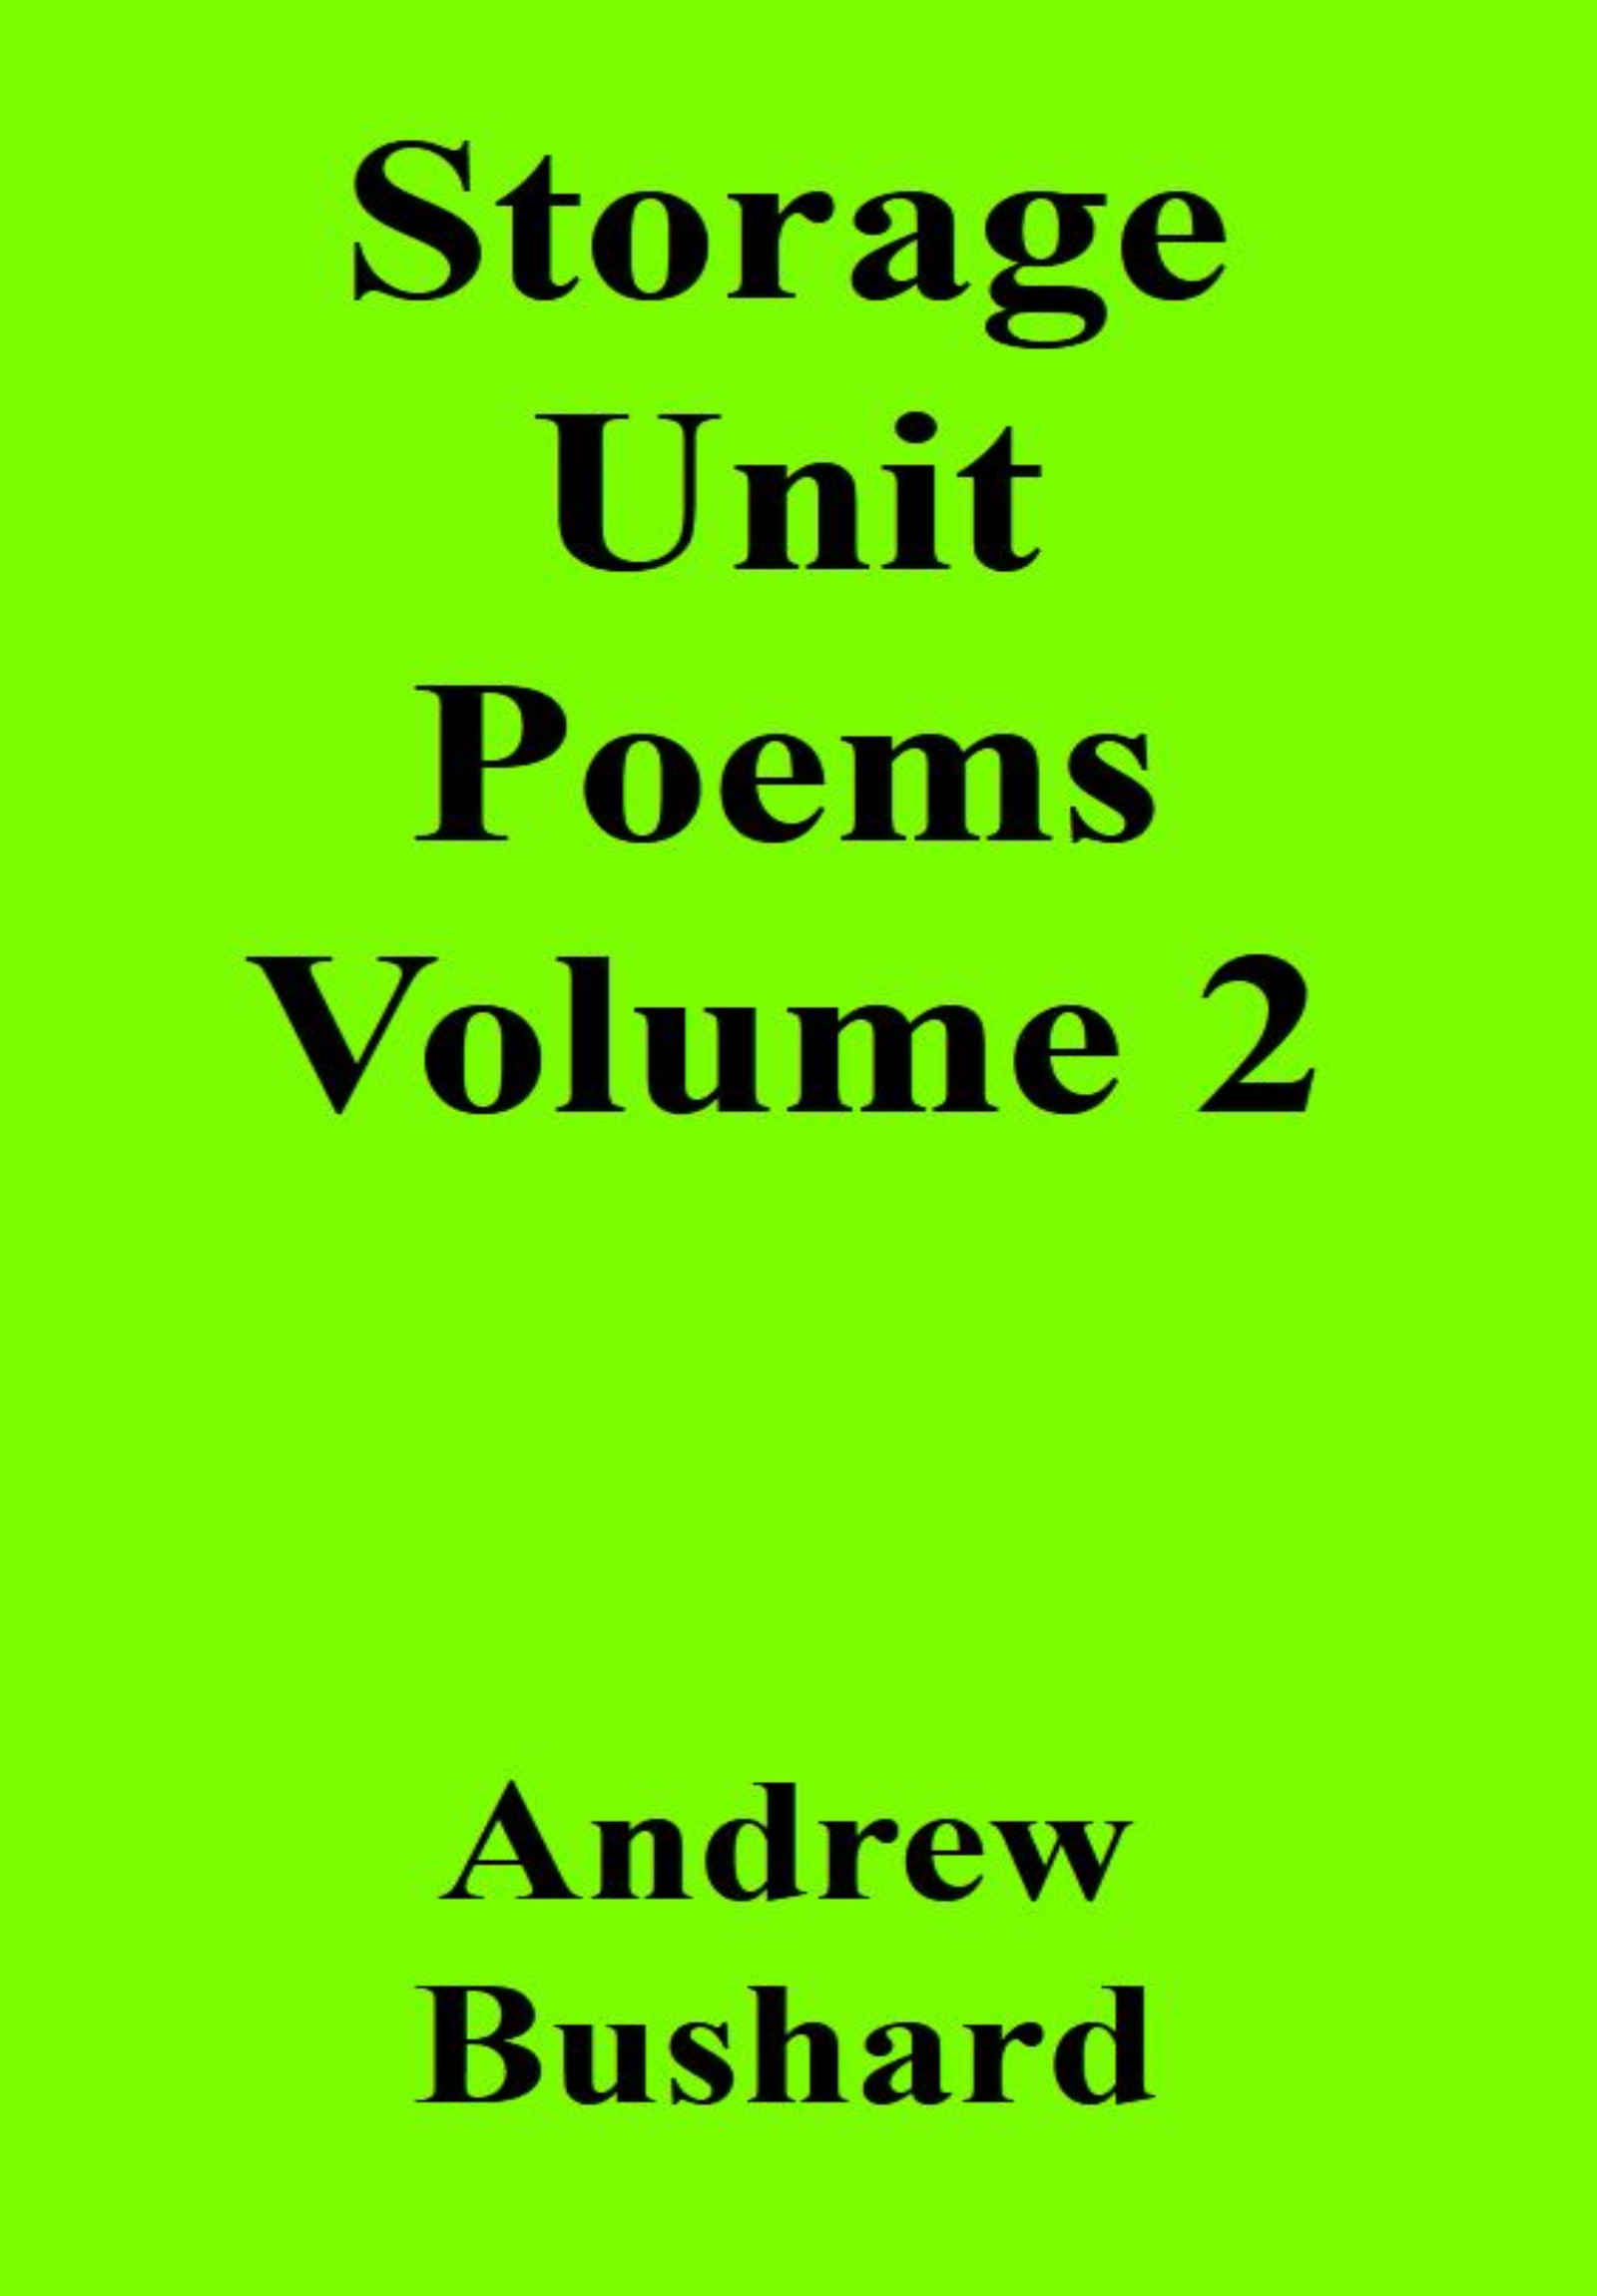 Storage Unit Poems Volume 2 Audiobook